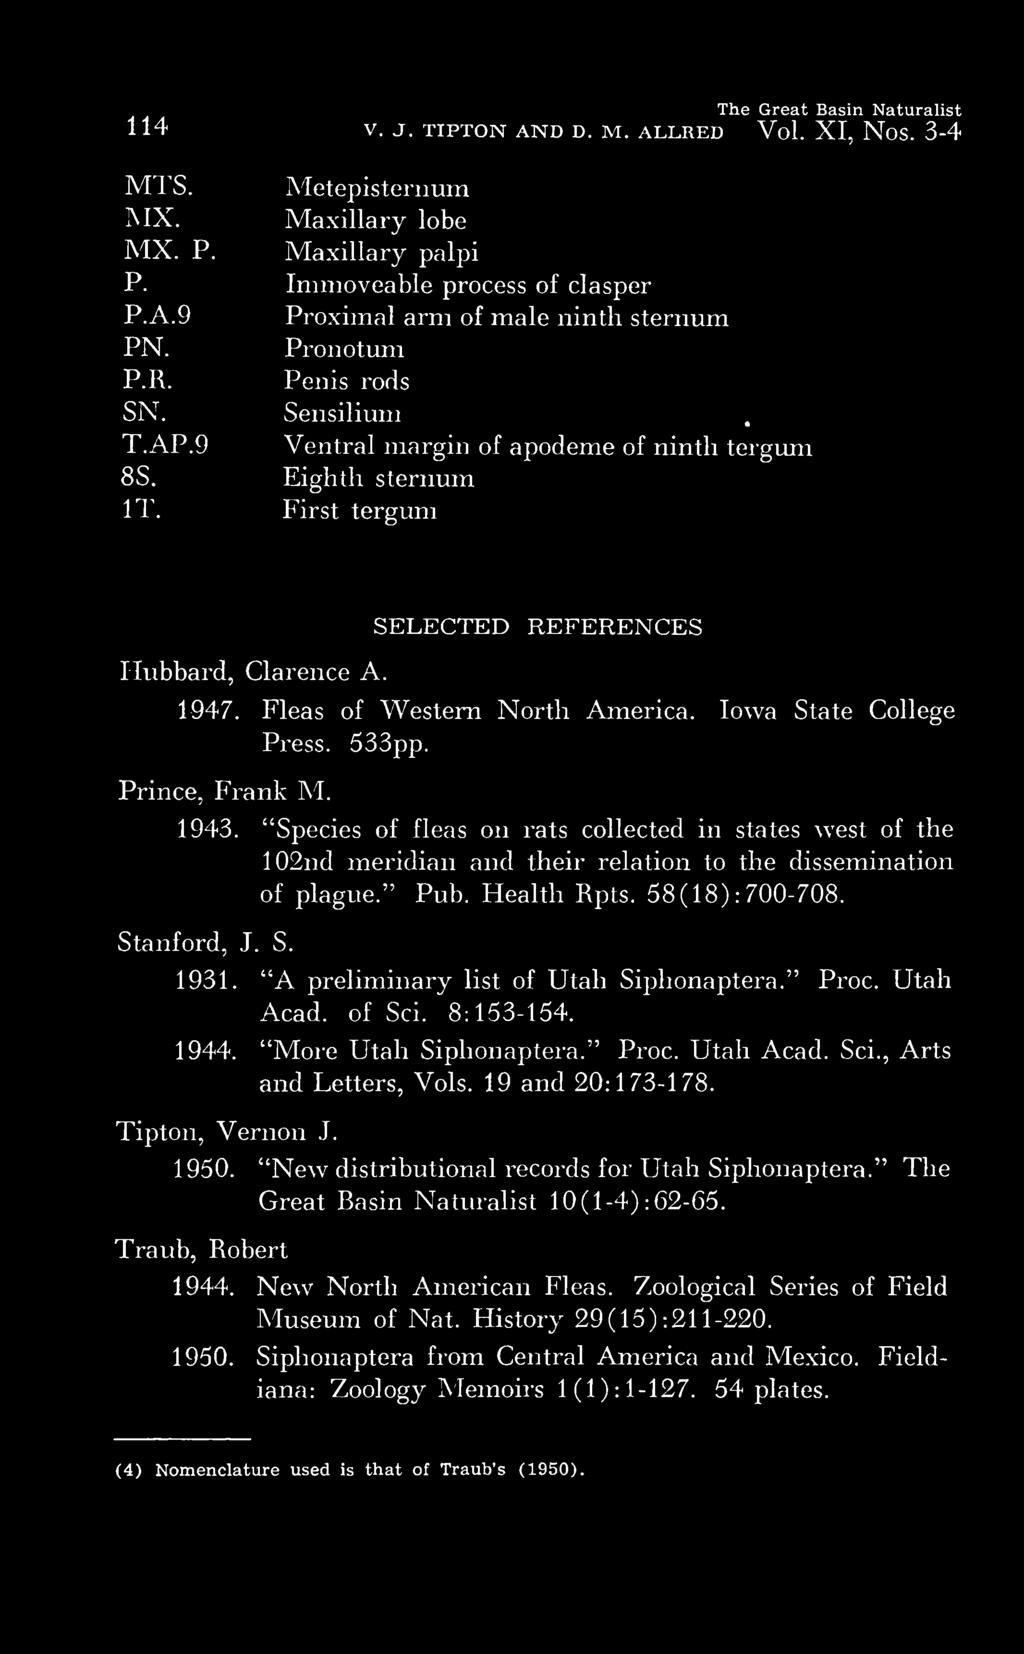 Fleas of Western North America. Iowa State College Press. Prince, Frank M. 533pp. 1943.